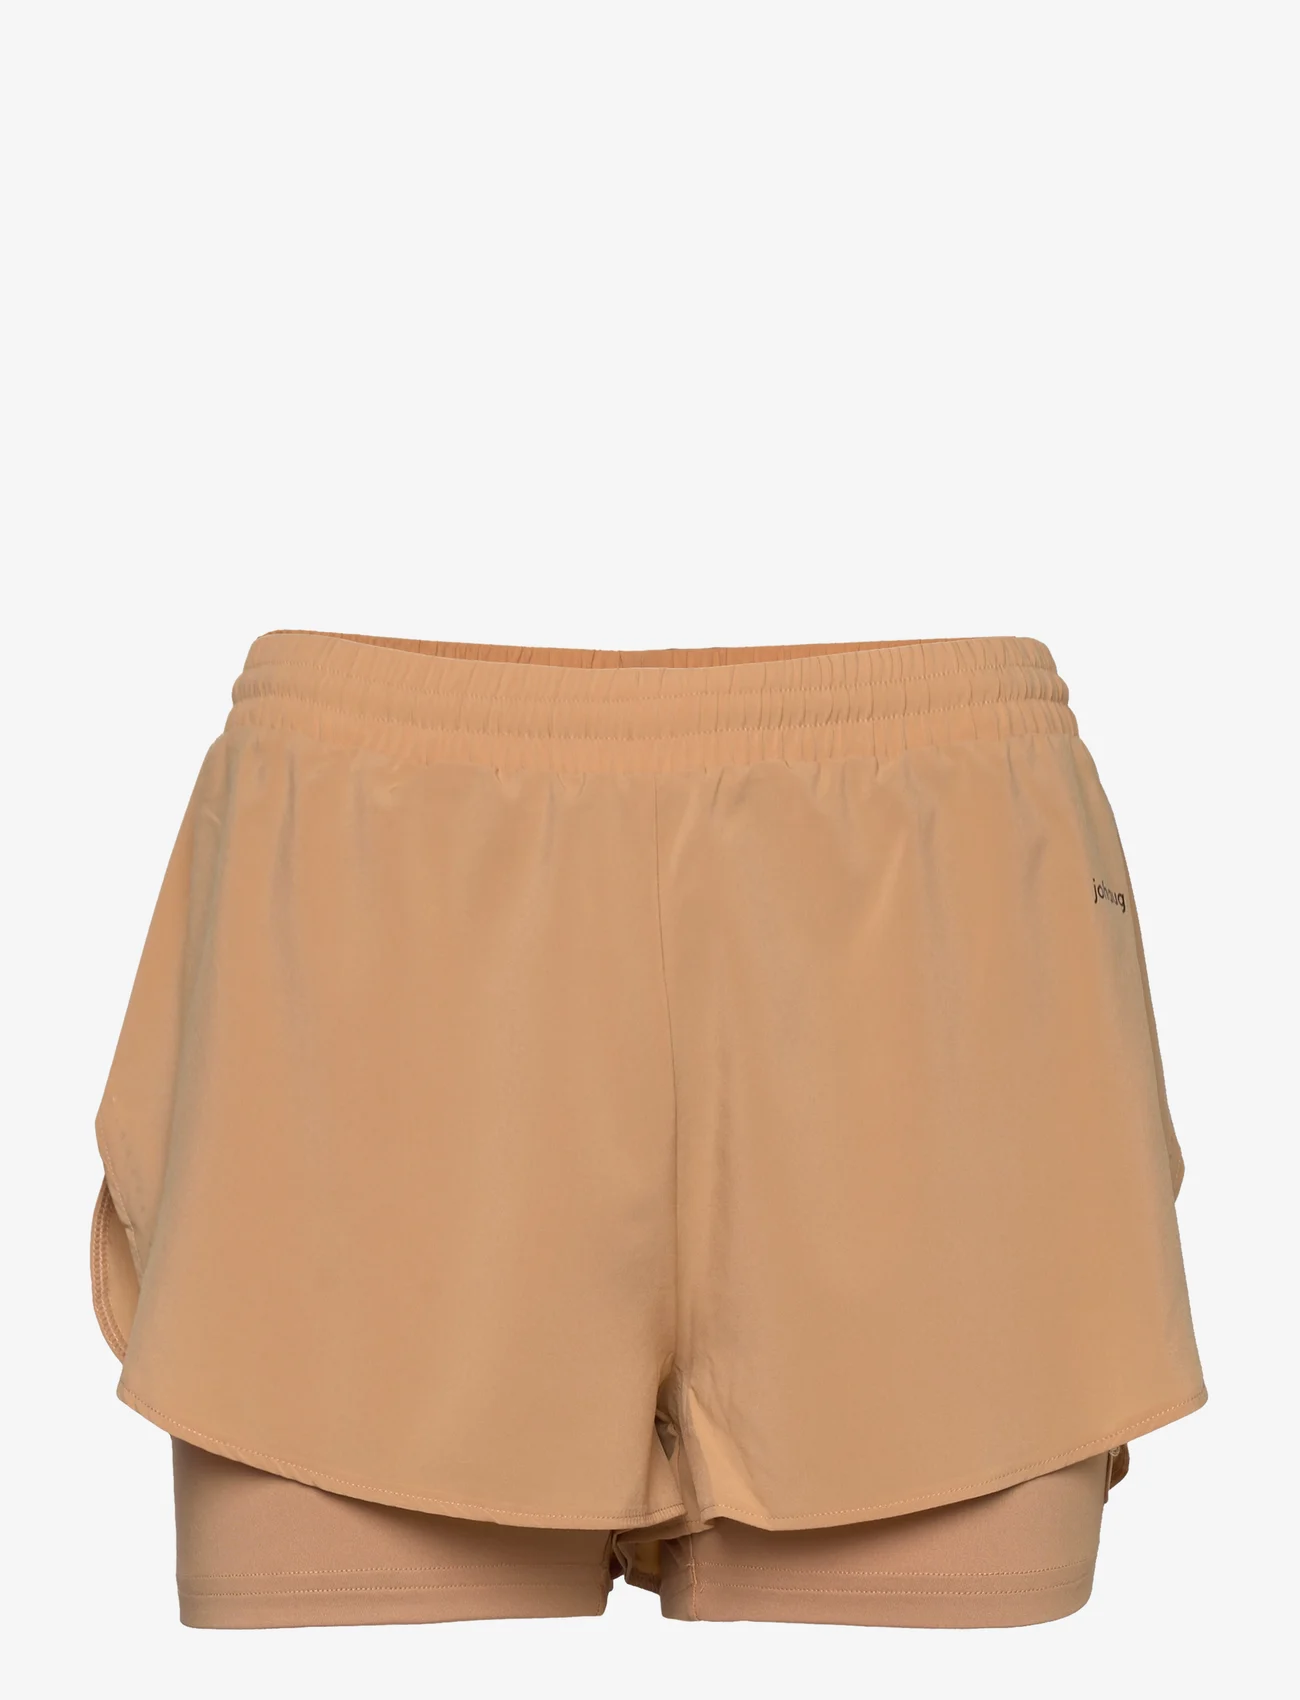 Johaug - Discipline Shorts 2.0 - trening shorts - brown - 0